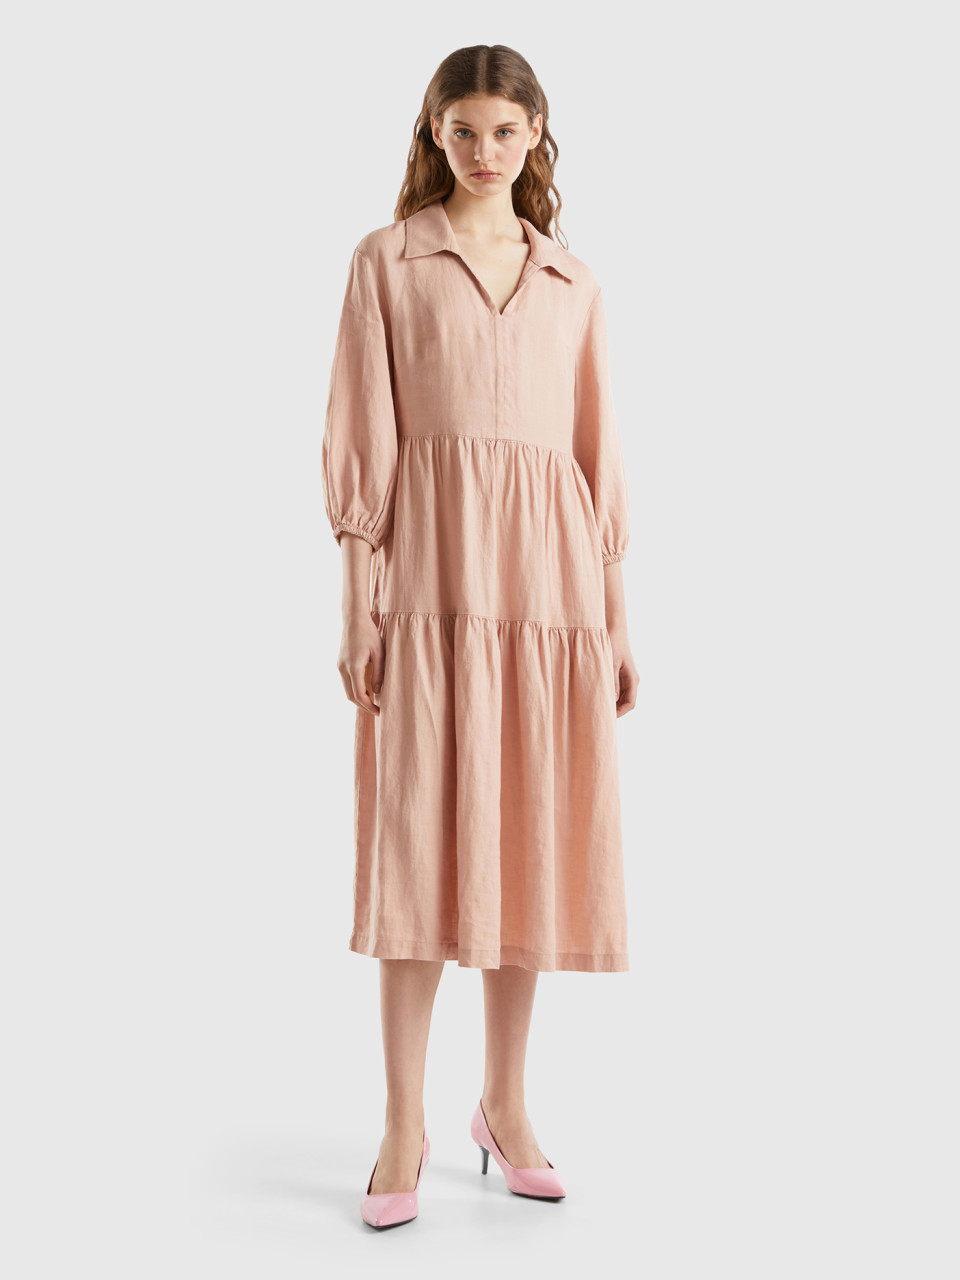 Benetton, Dress With Ruffles In Pure Linen, Soft Pink, Women